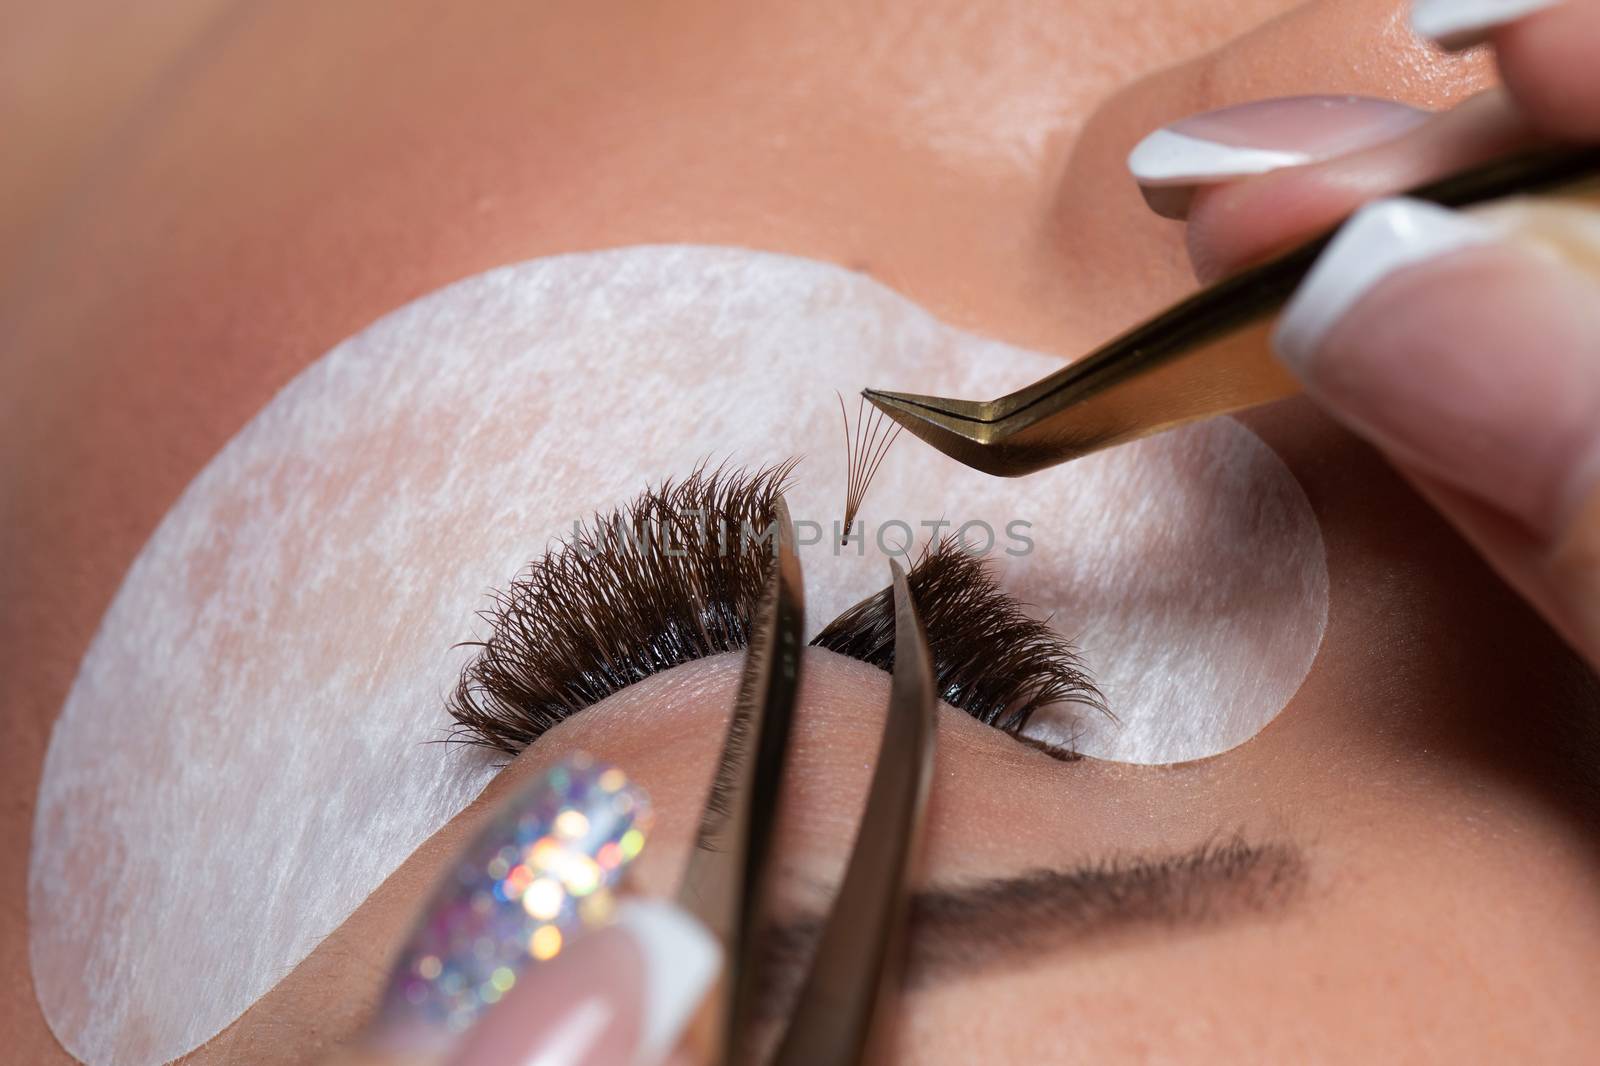 Eyelash Extension Procedure. Woman Eye with Long Eyelashes. Lashes. Close up tweezers, macro, selective focus